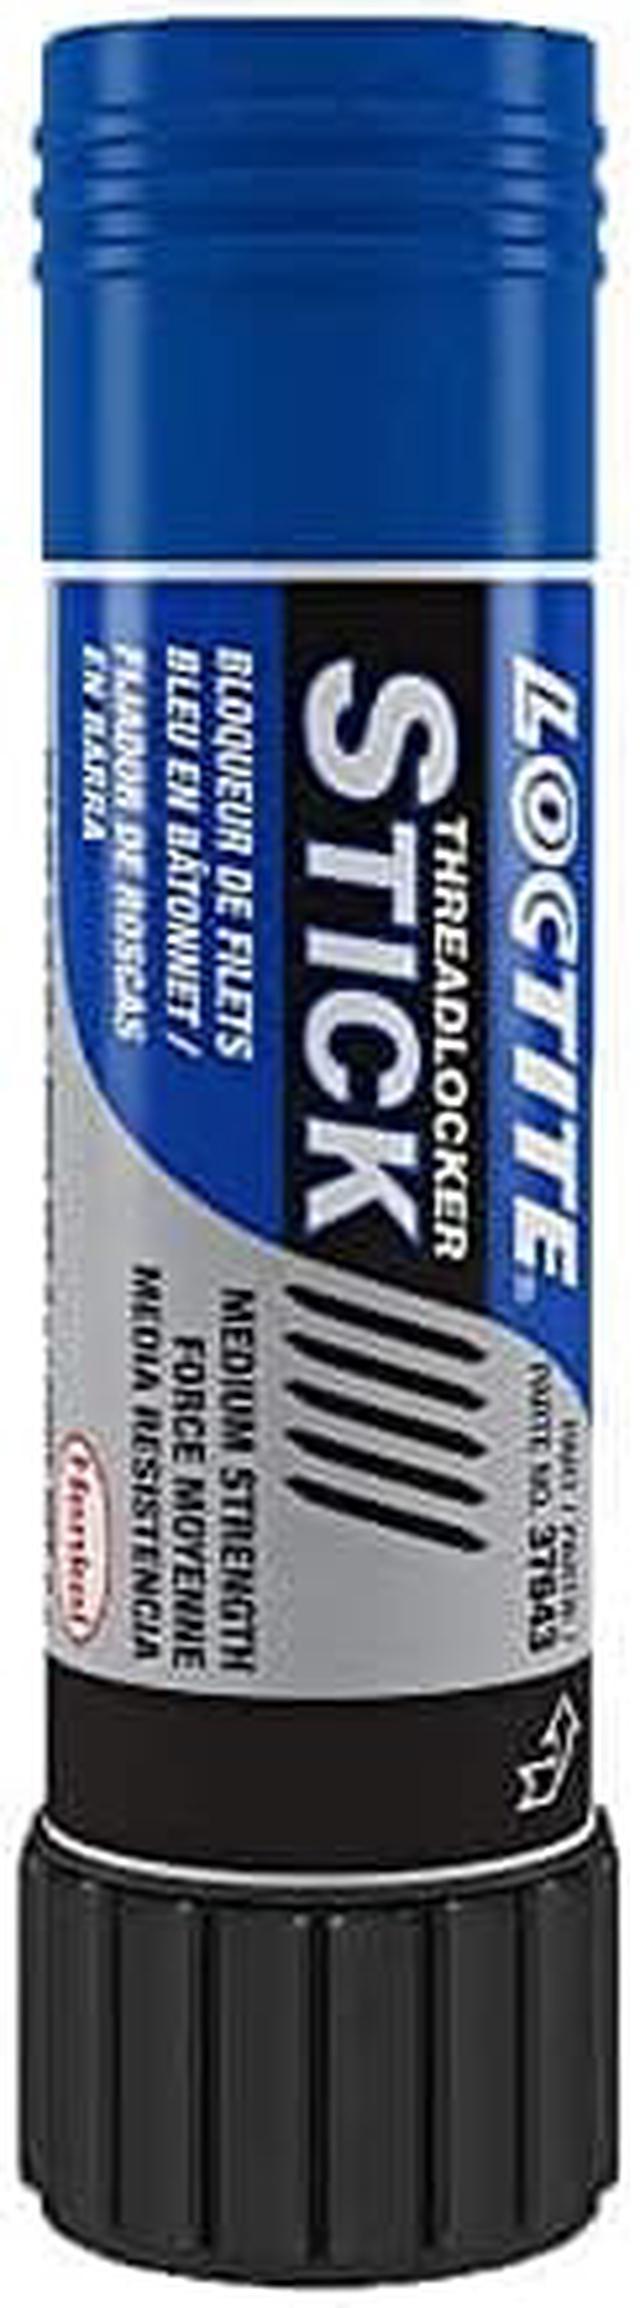 Loctite 248 Blue Threadlocker Glue Stick: All-Purpose, Medium-Strength,  Anaerobic